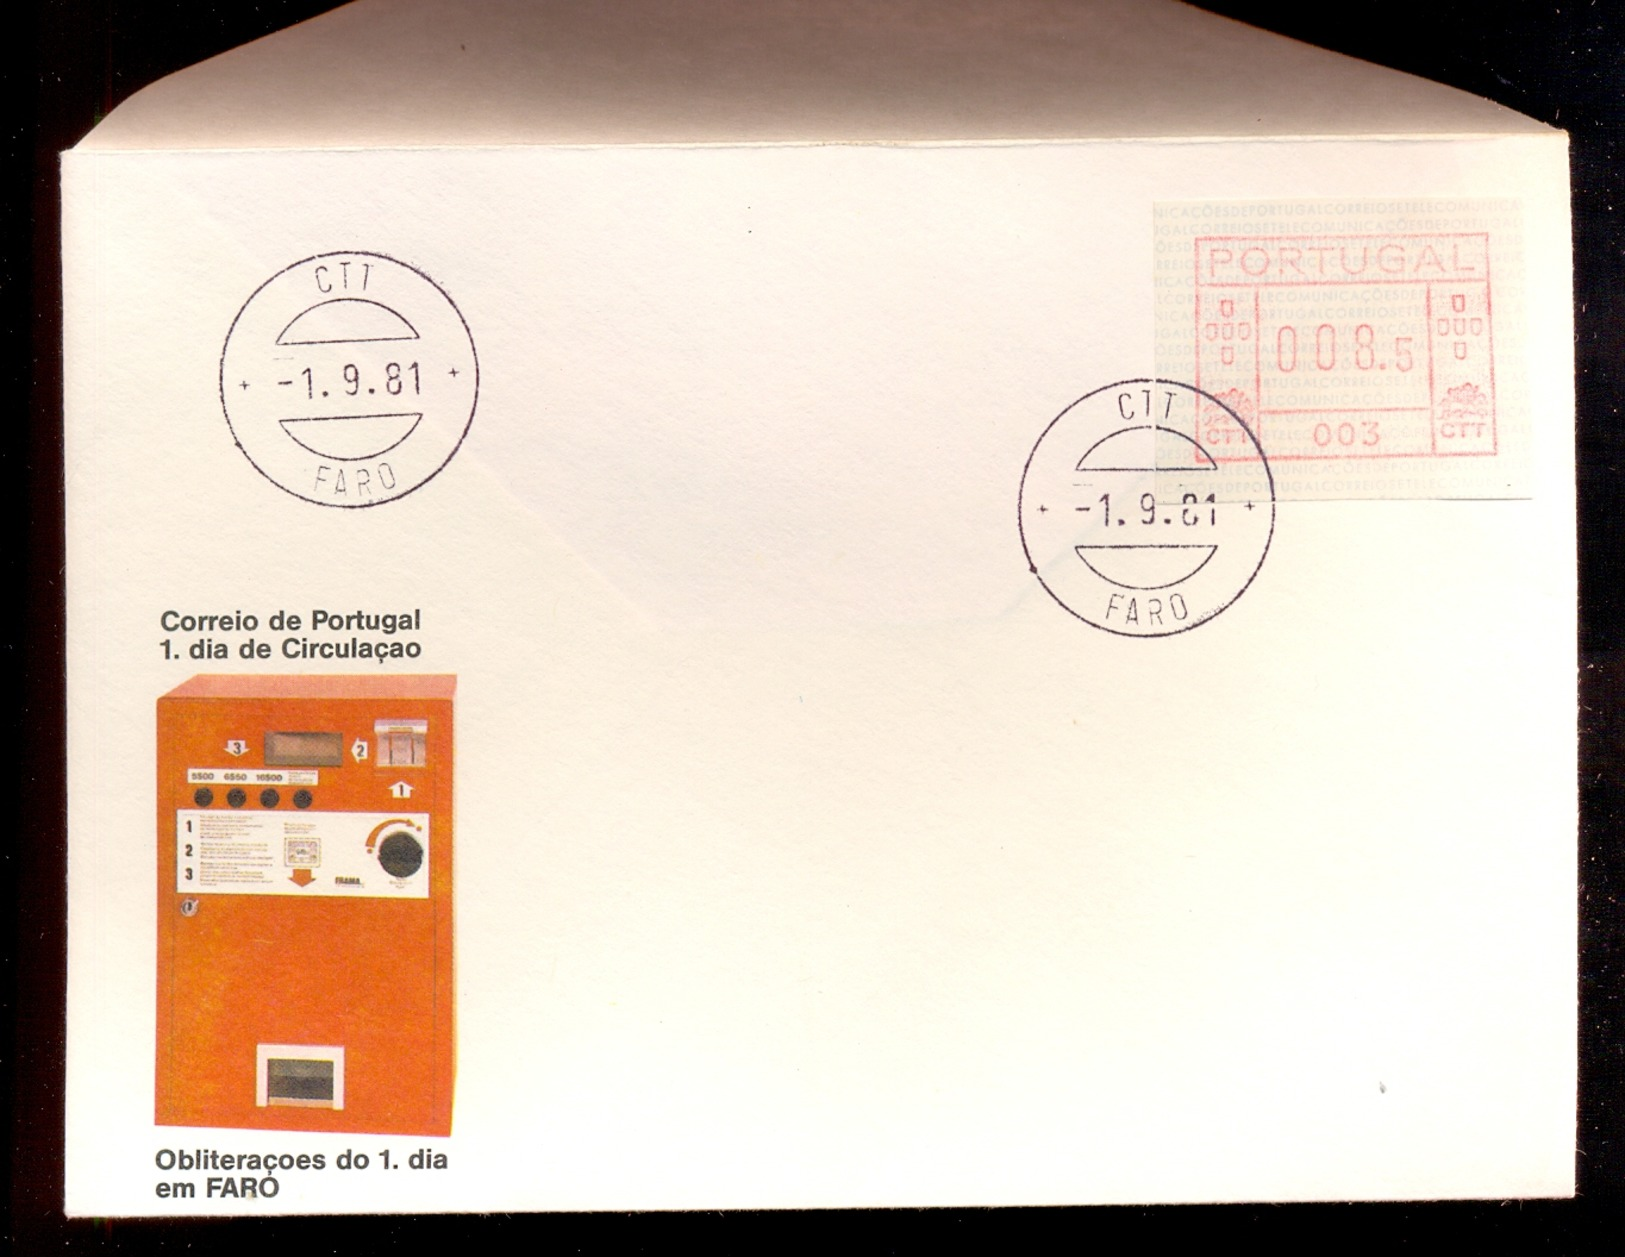 FDC PORTUGAL 003 FARO * 008.5 * 1981 * LABEL ATM FRAMA - Automaatzegels [ATM]